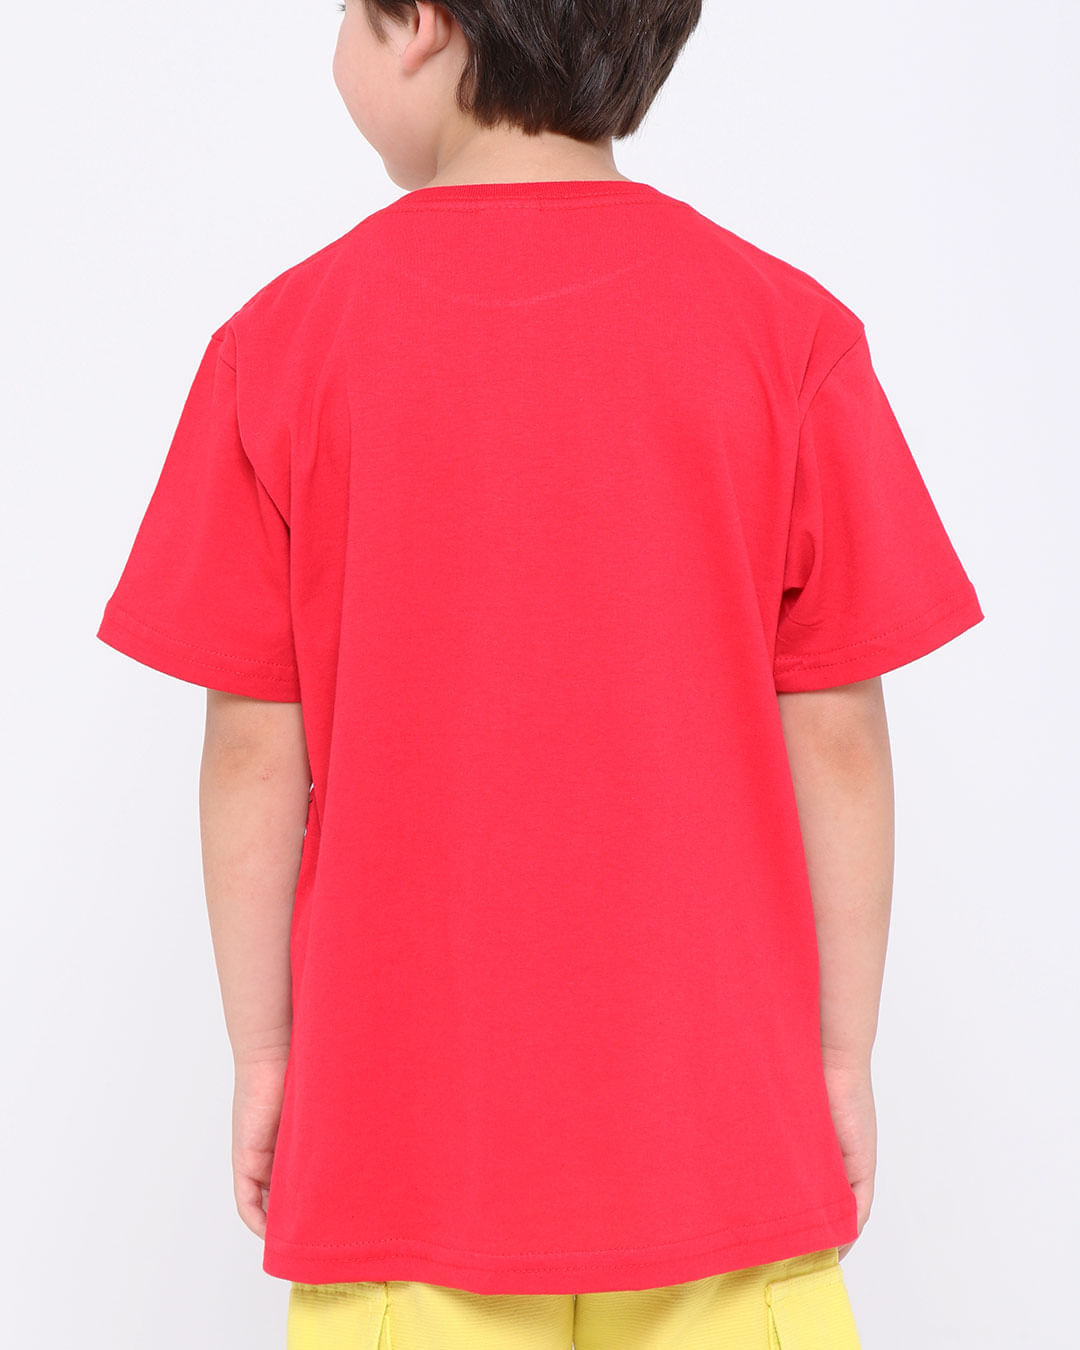 Camiseta-infantil-manga-curta-estampa-Homem-de-Ferro-Marvel-vermelha